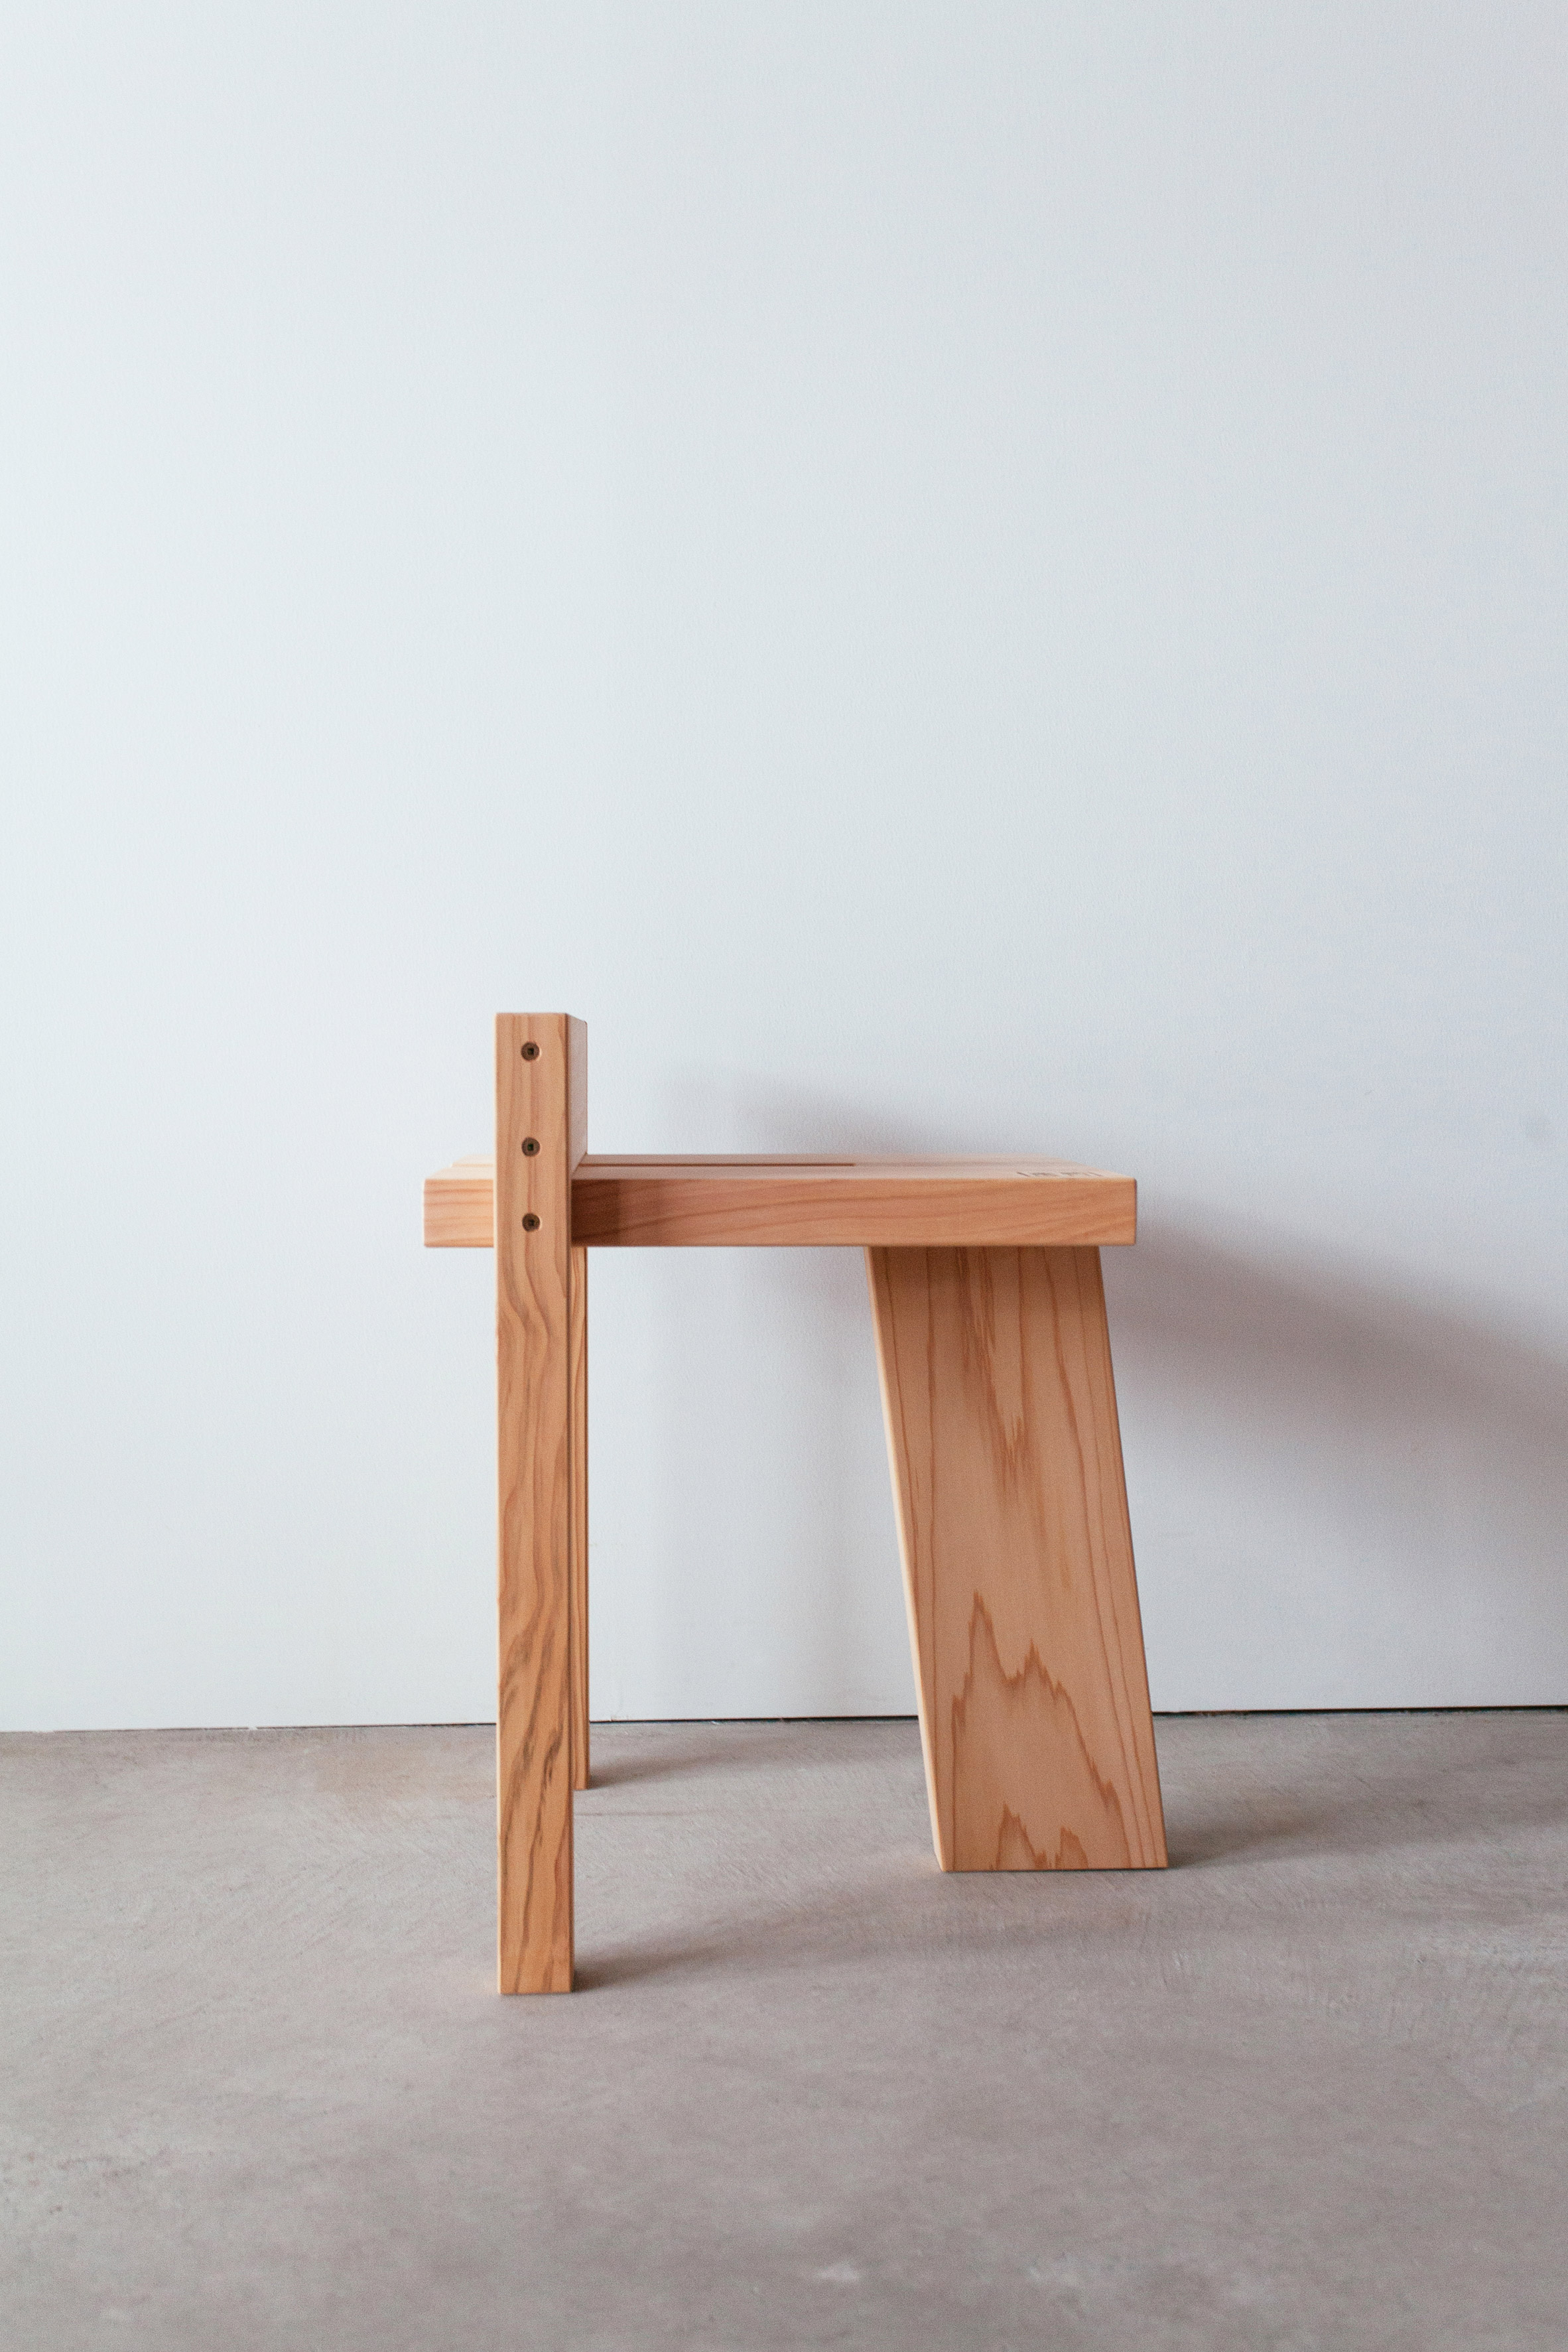 Studio Adjective create easy-to-assemble stool for Ishinomaki 